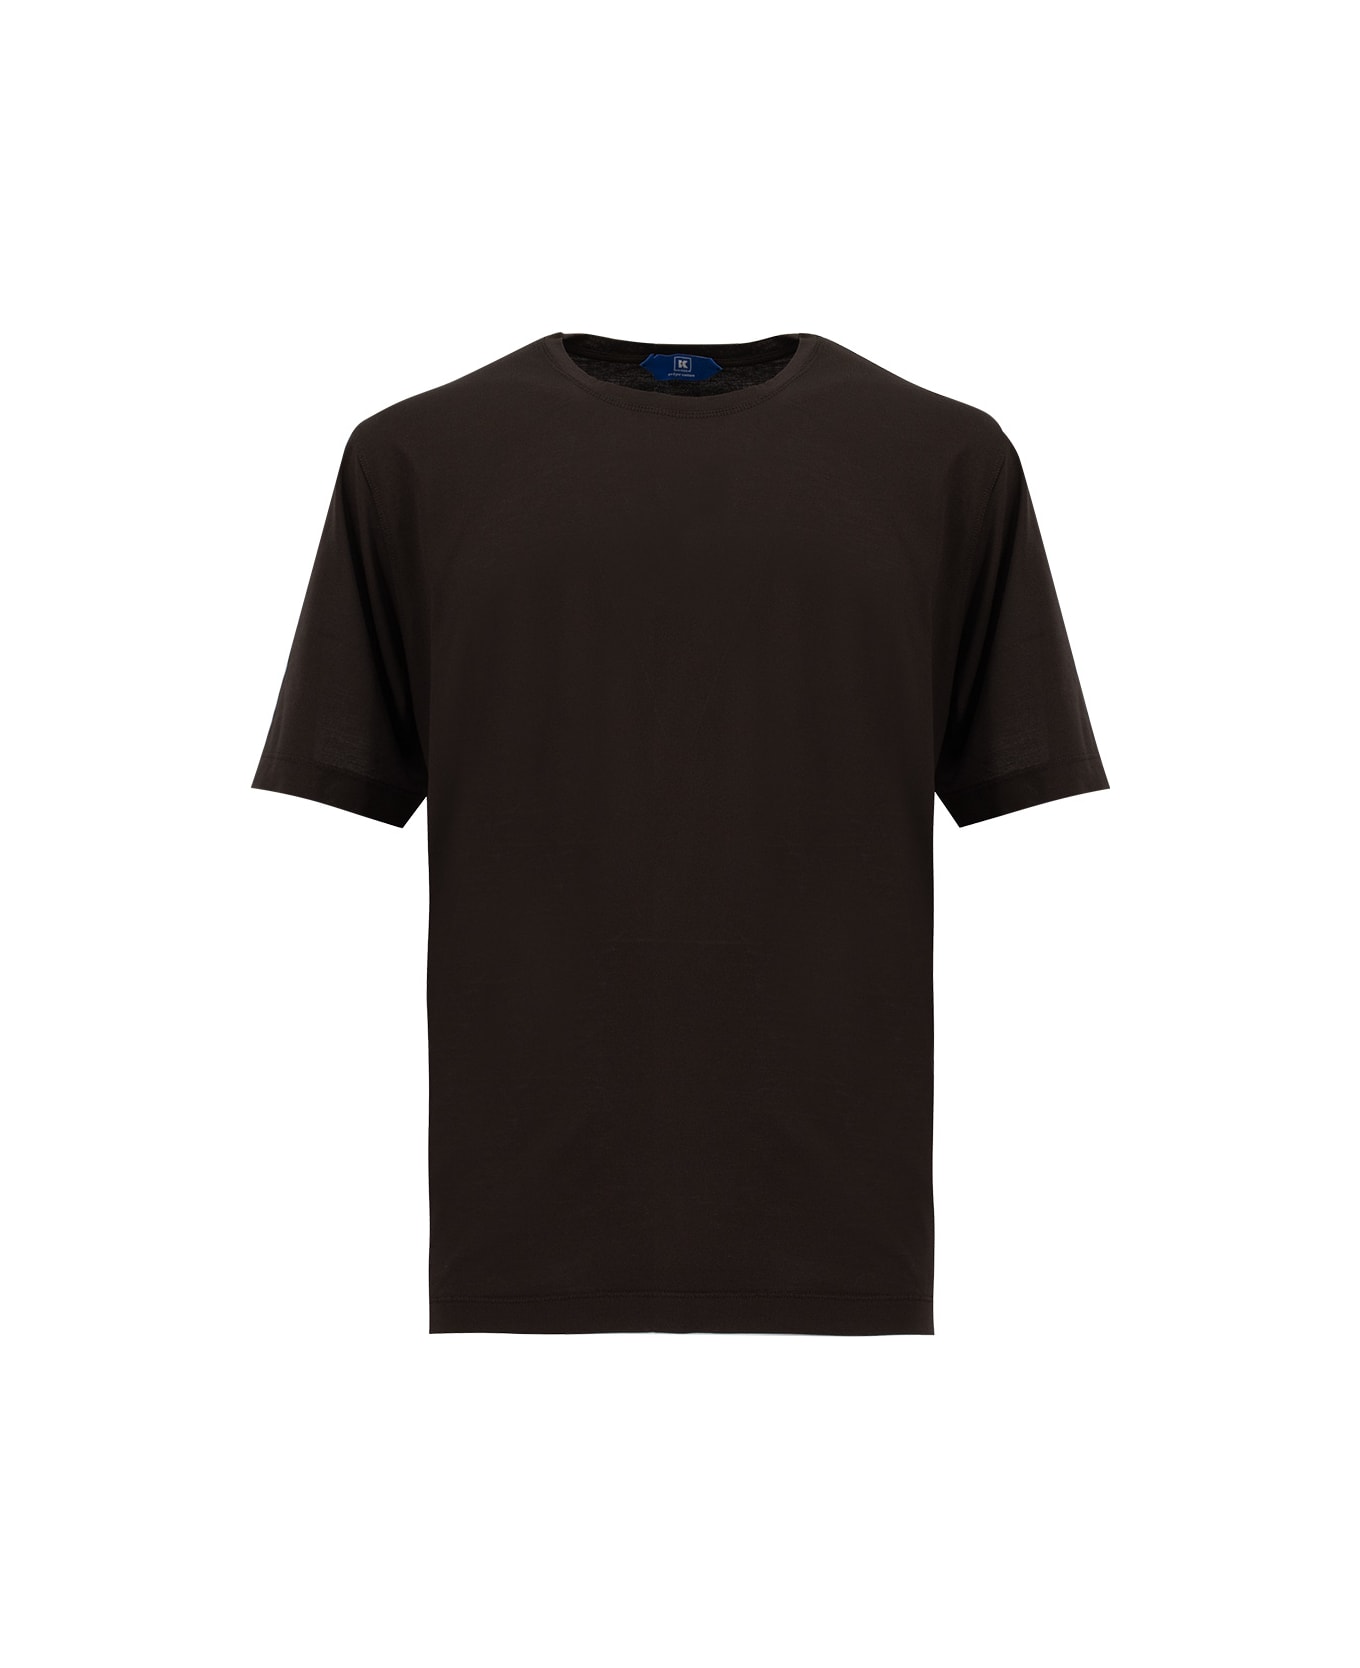 Kired T-shirt - BROWN シャツ